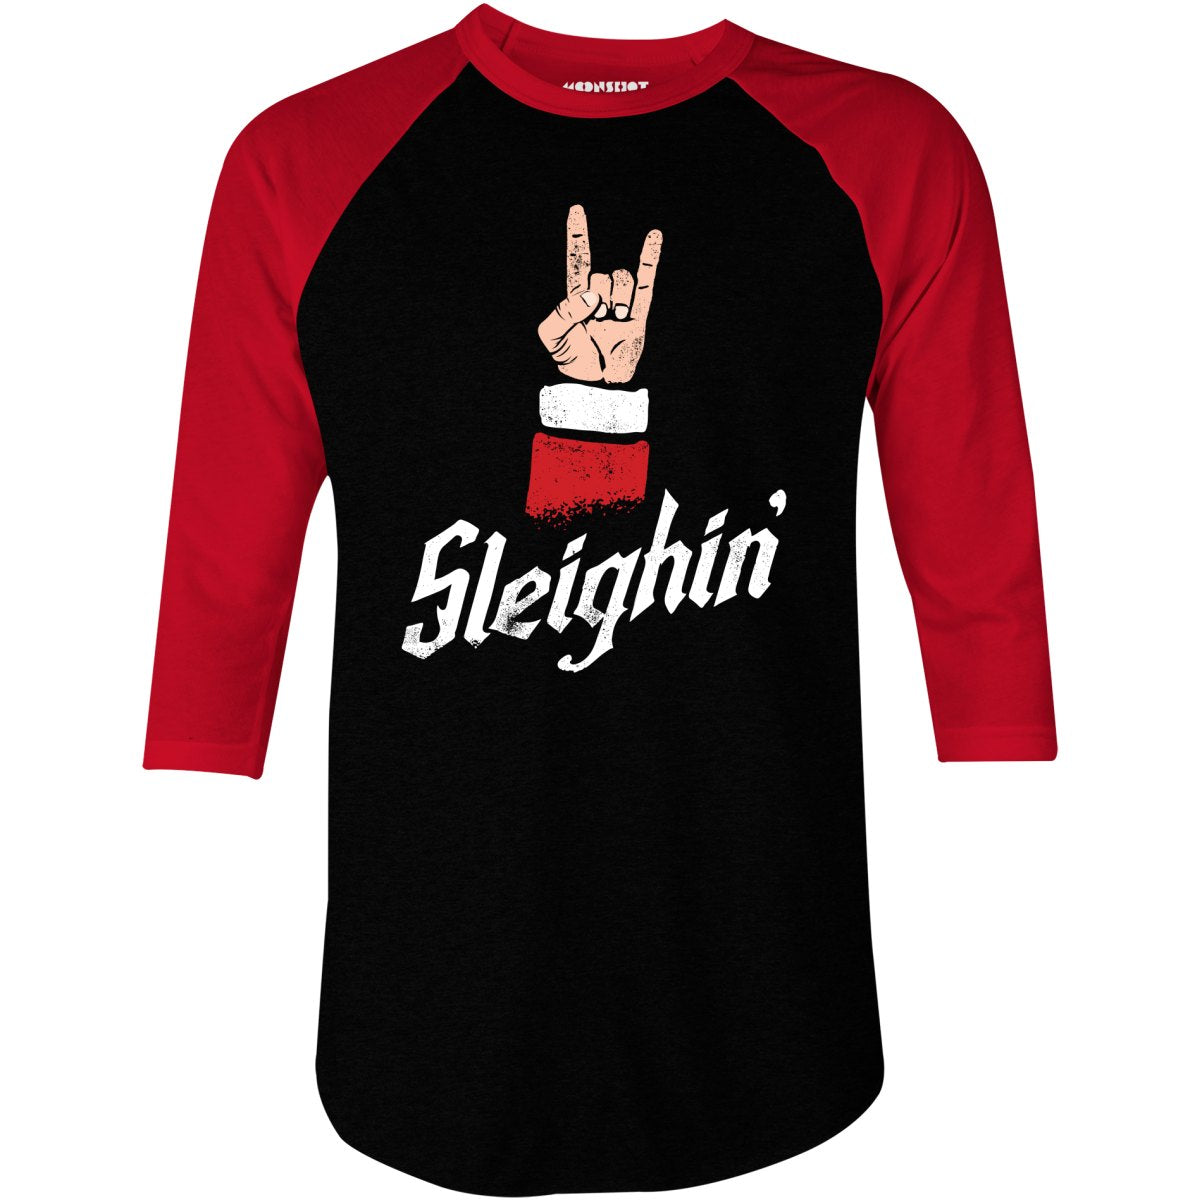 Sleighin' - 3/4 Sleeve Raglan T-Shirt